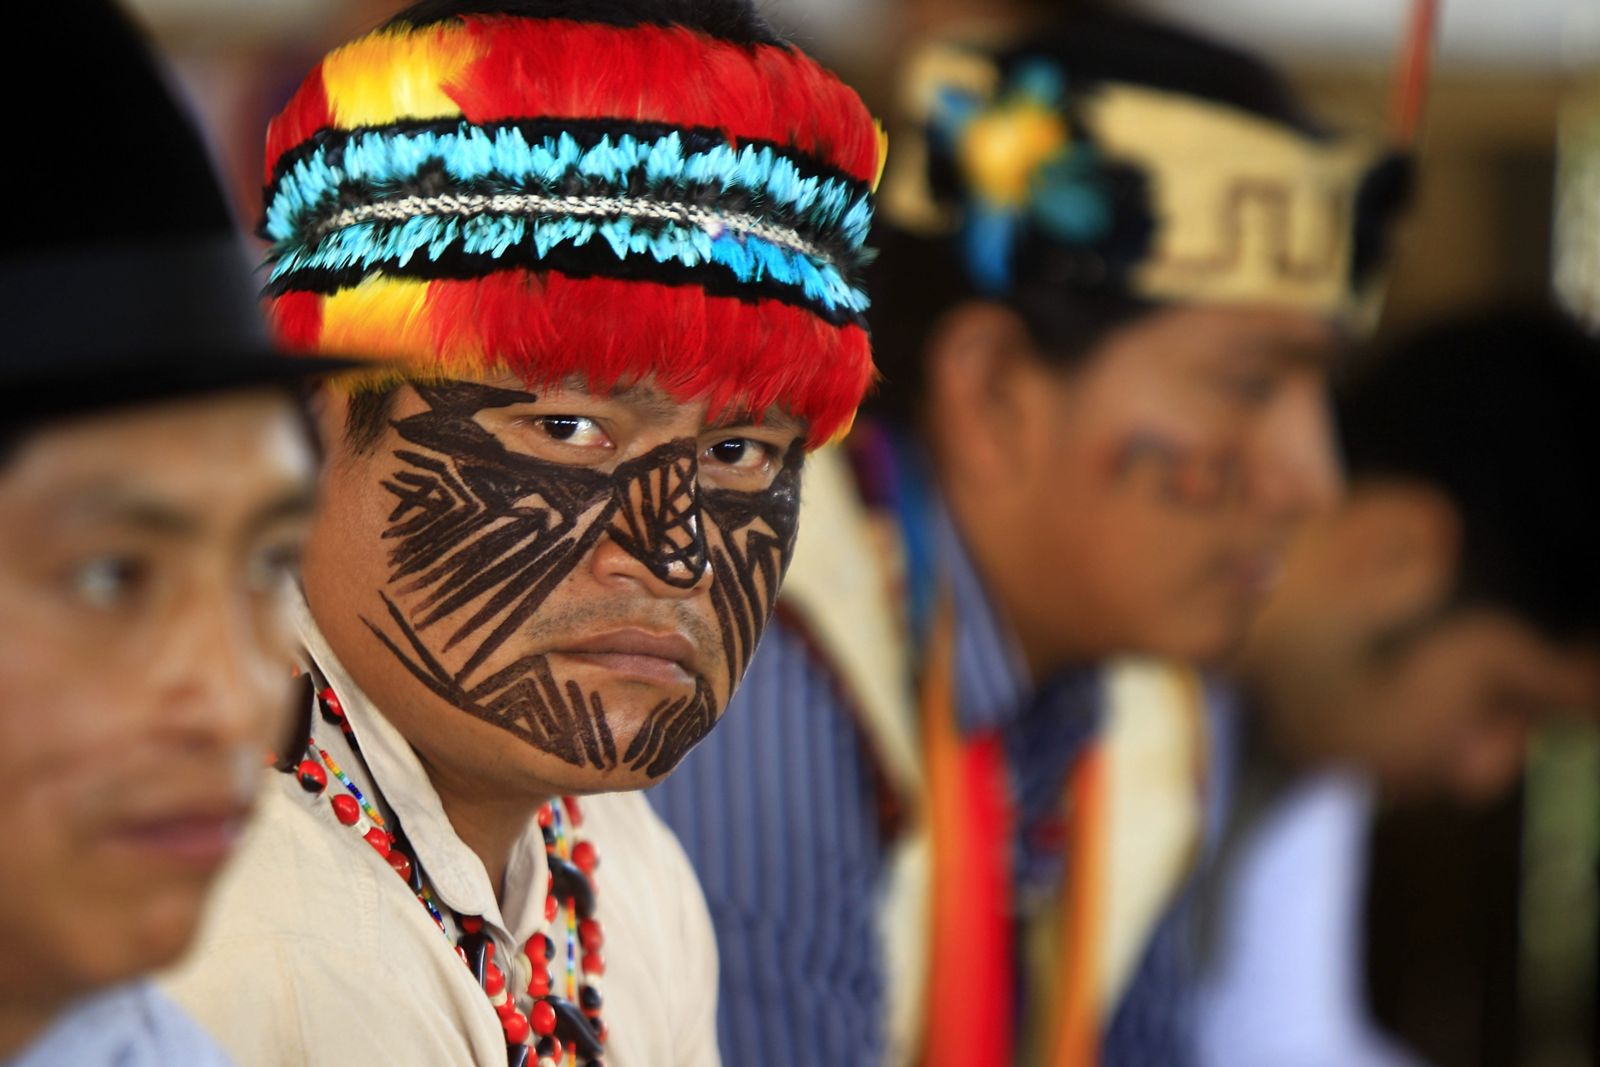 Legal empowerment allows indigenous Ecuadoreans to fight multinationals